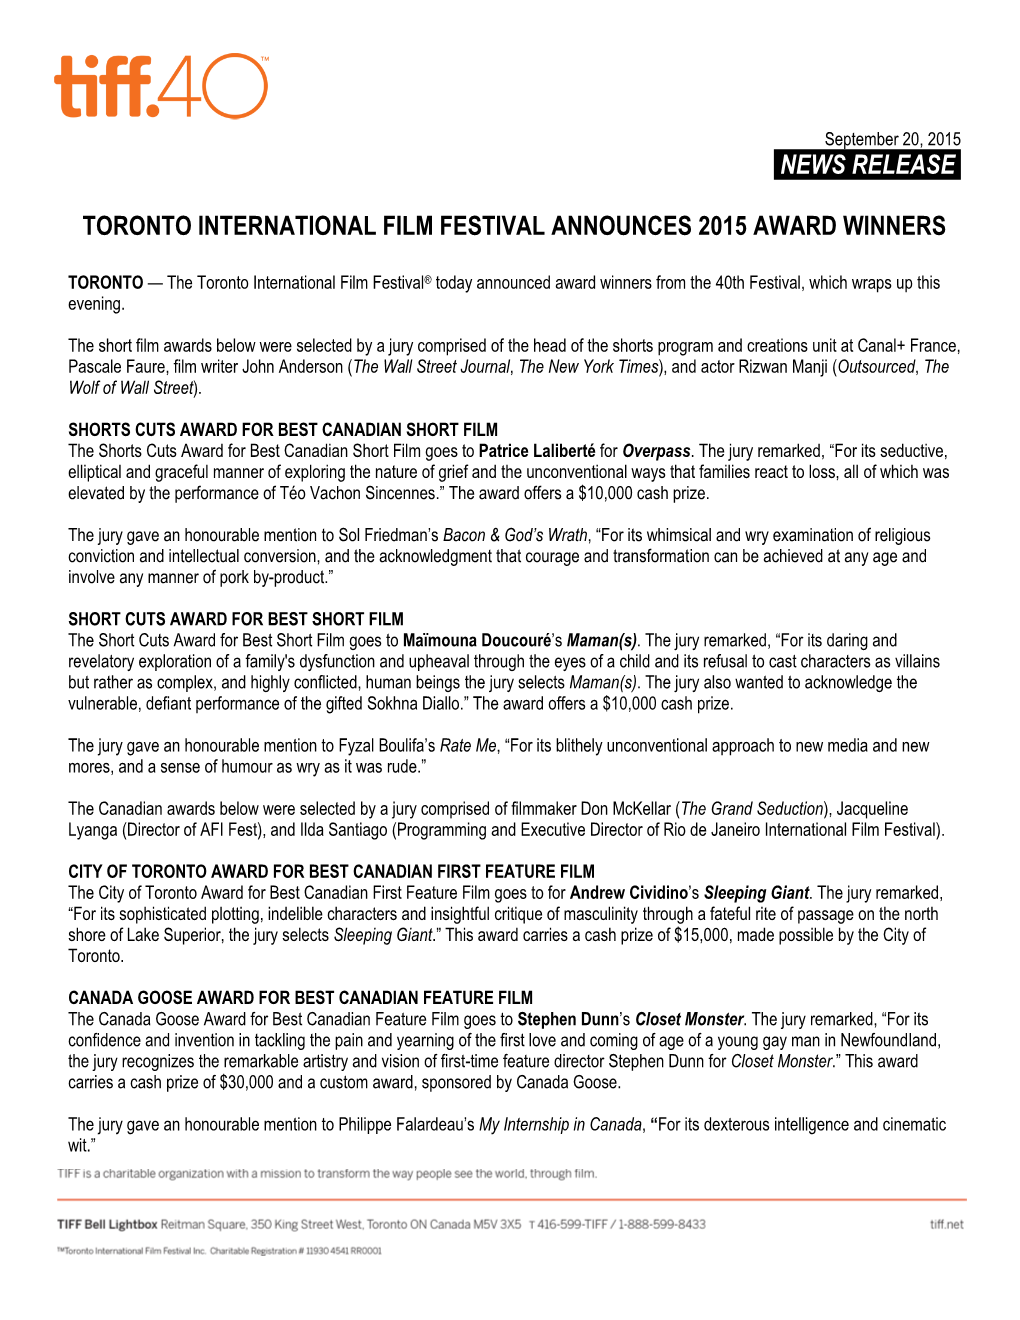 News Release. Toronto International